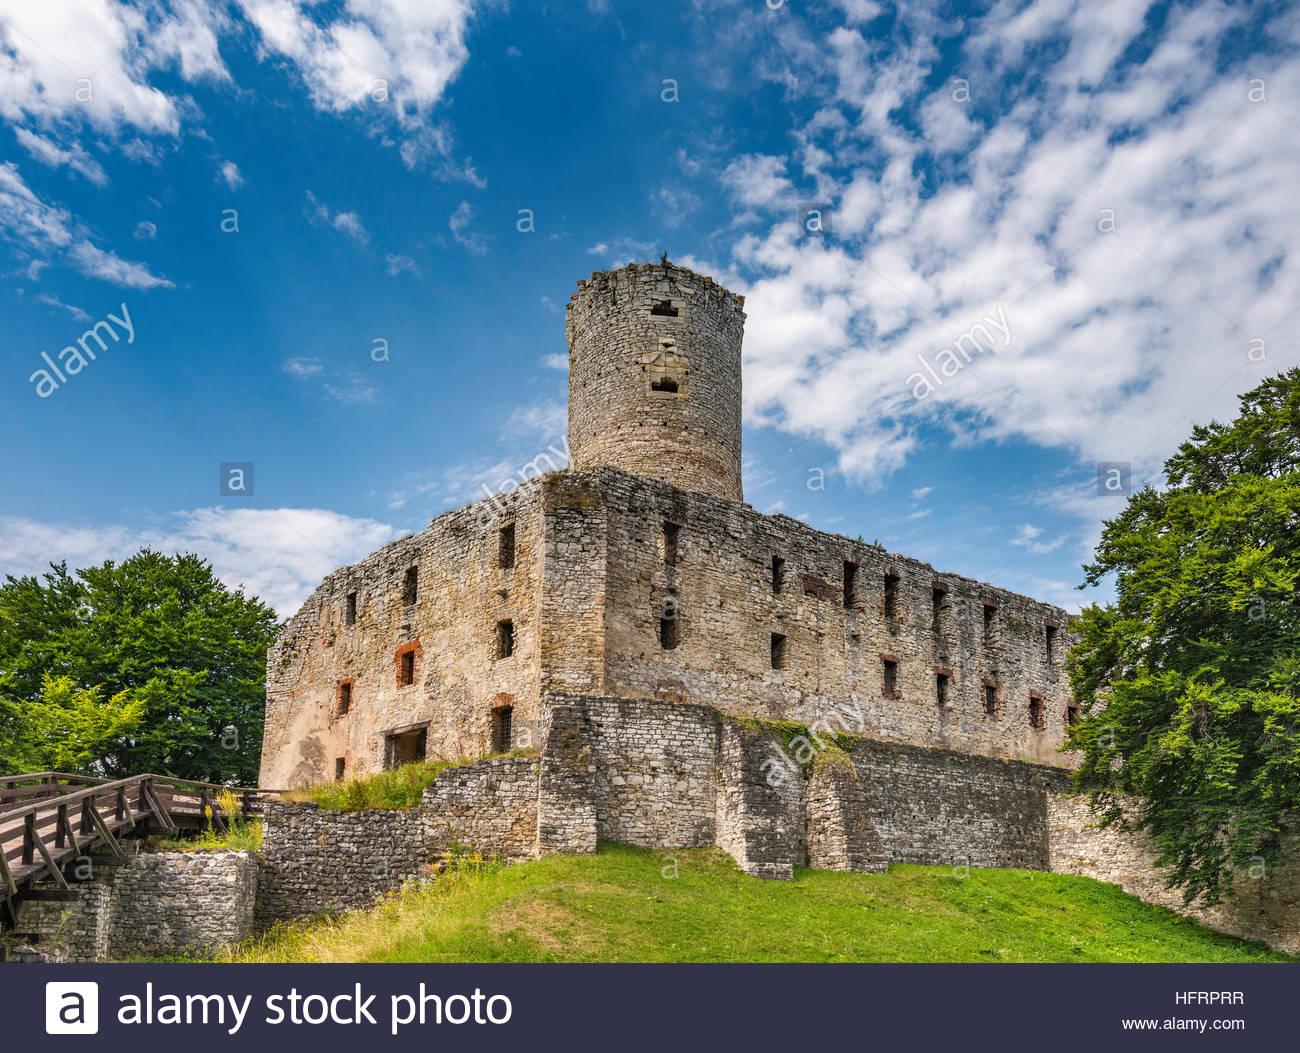 Lipowiec Castle HD wallpapers, Desktop wallpaper - most viewed